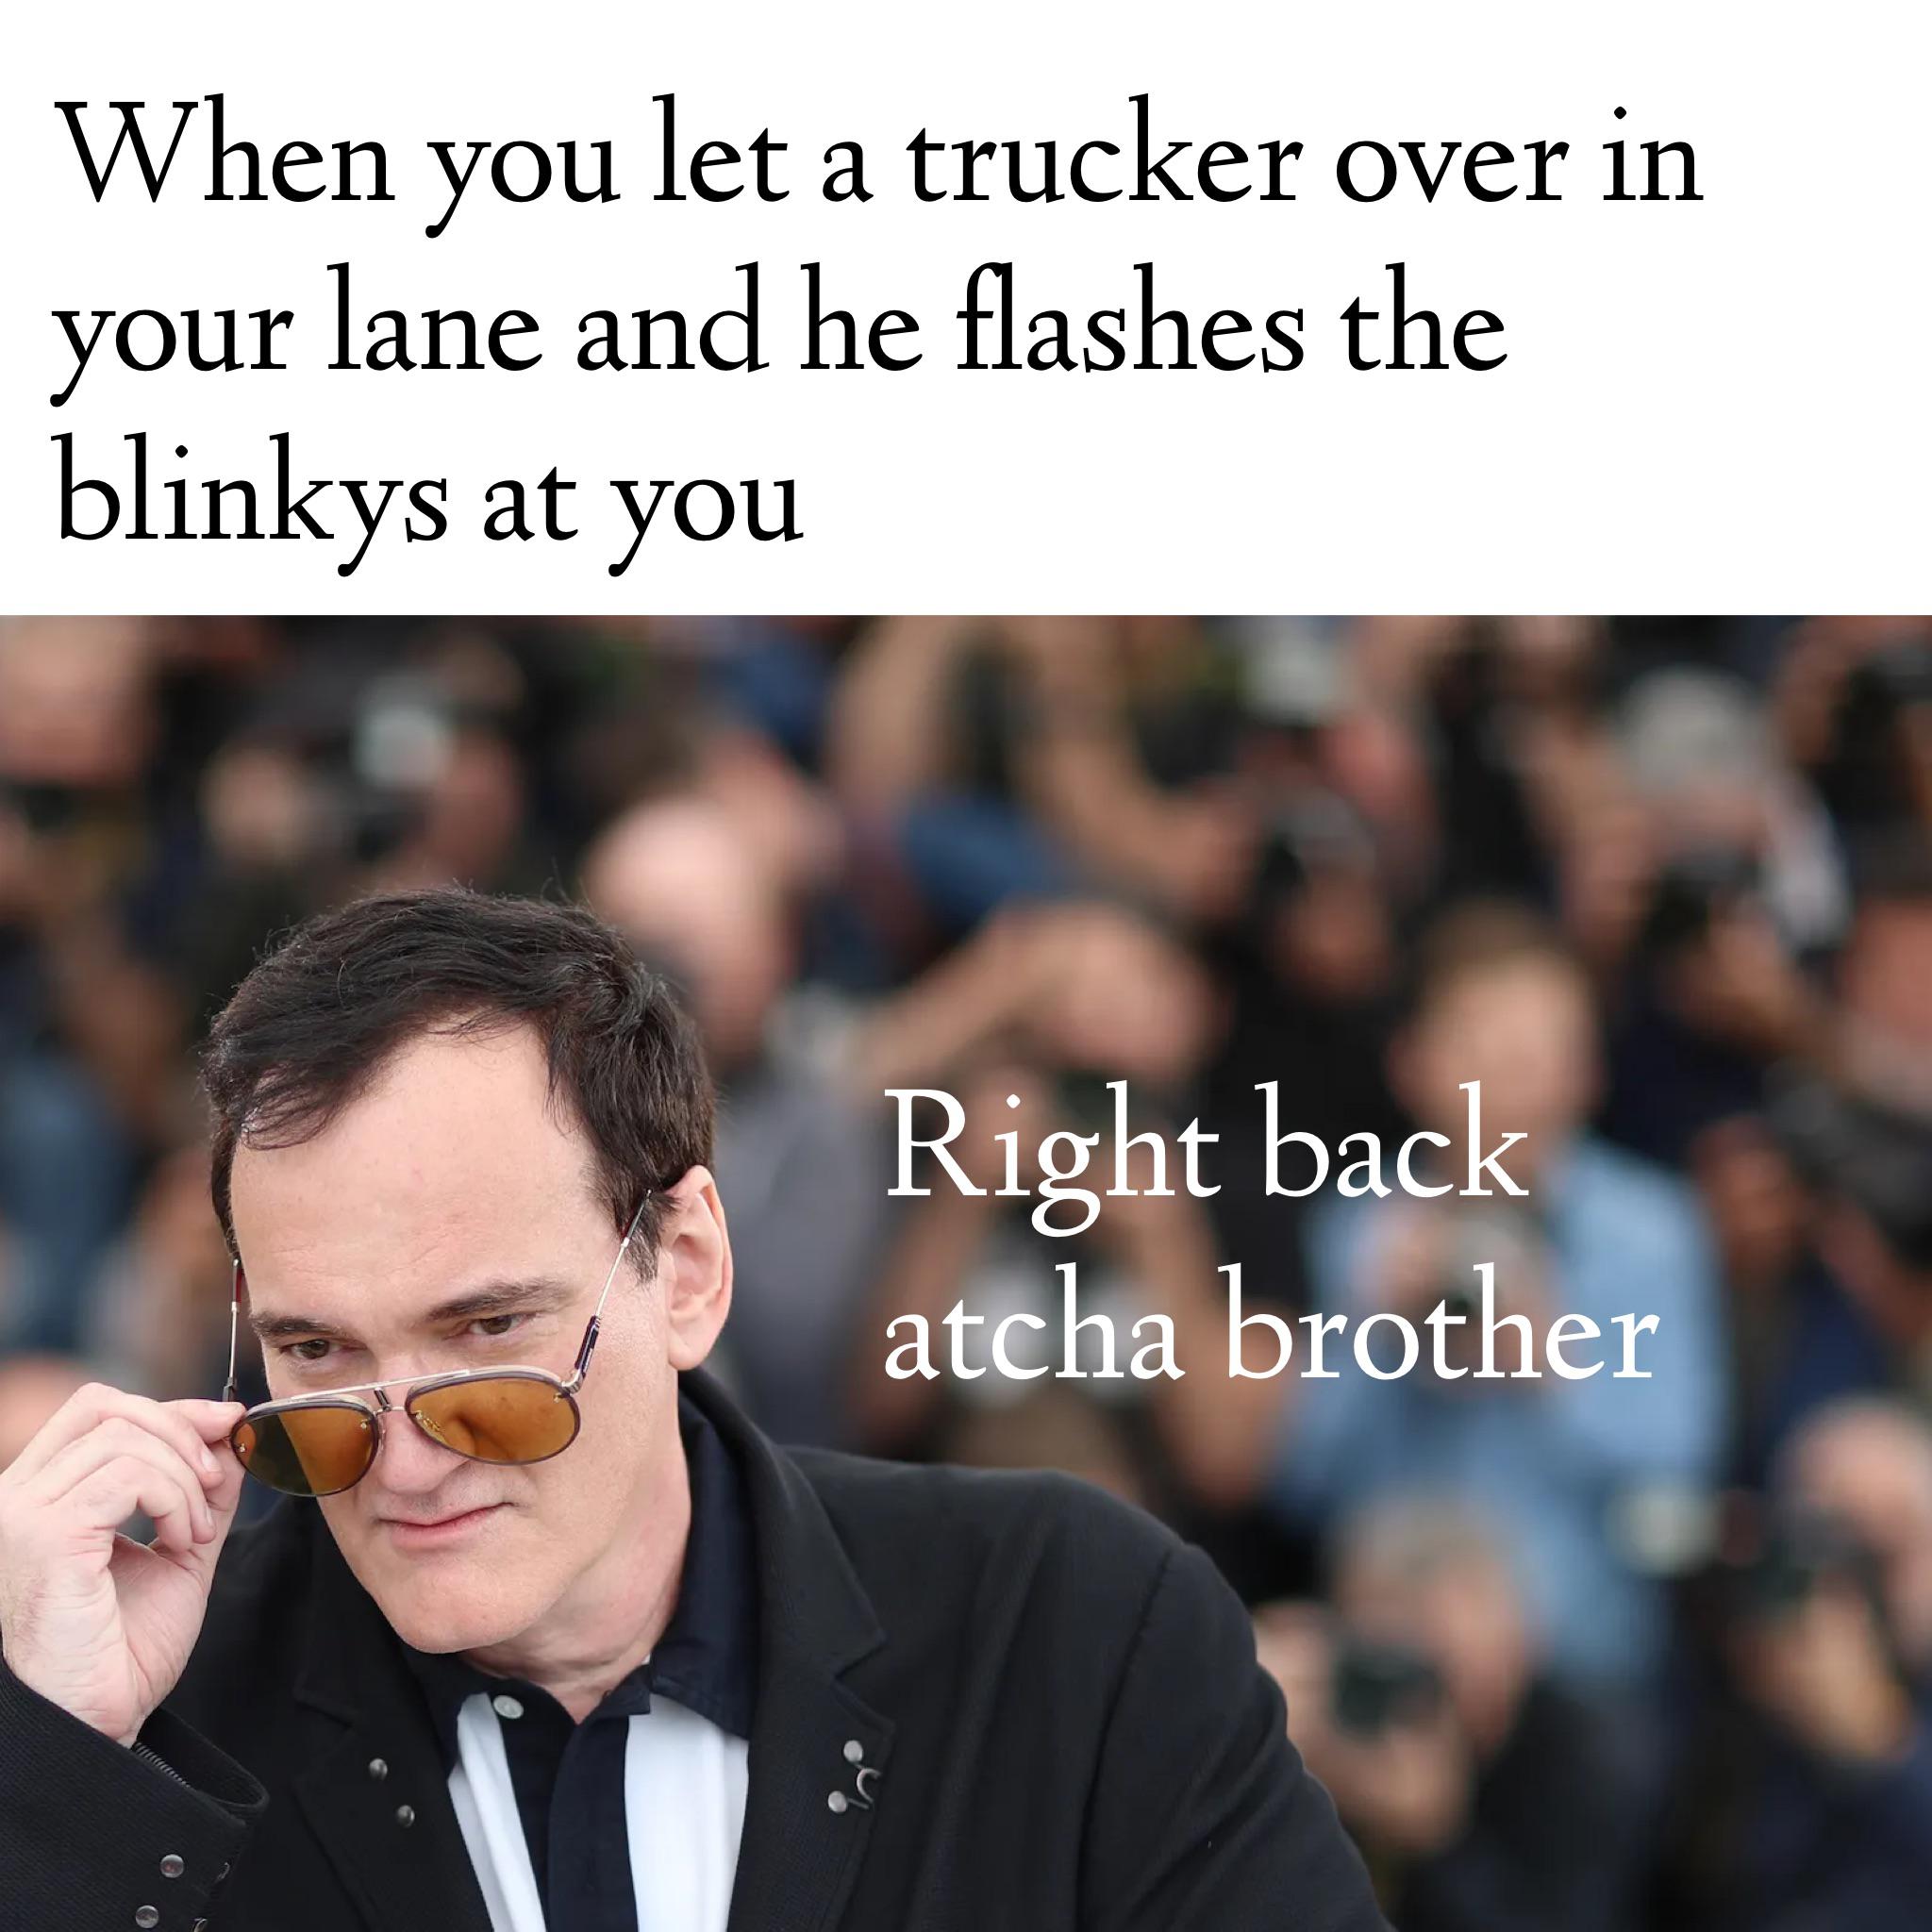 Let them switch lanes. 